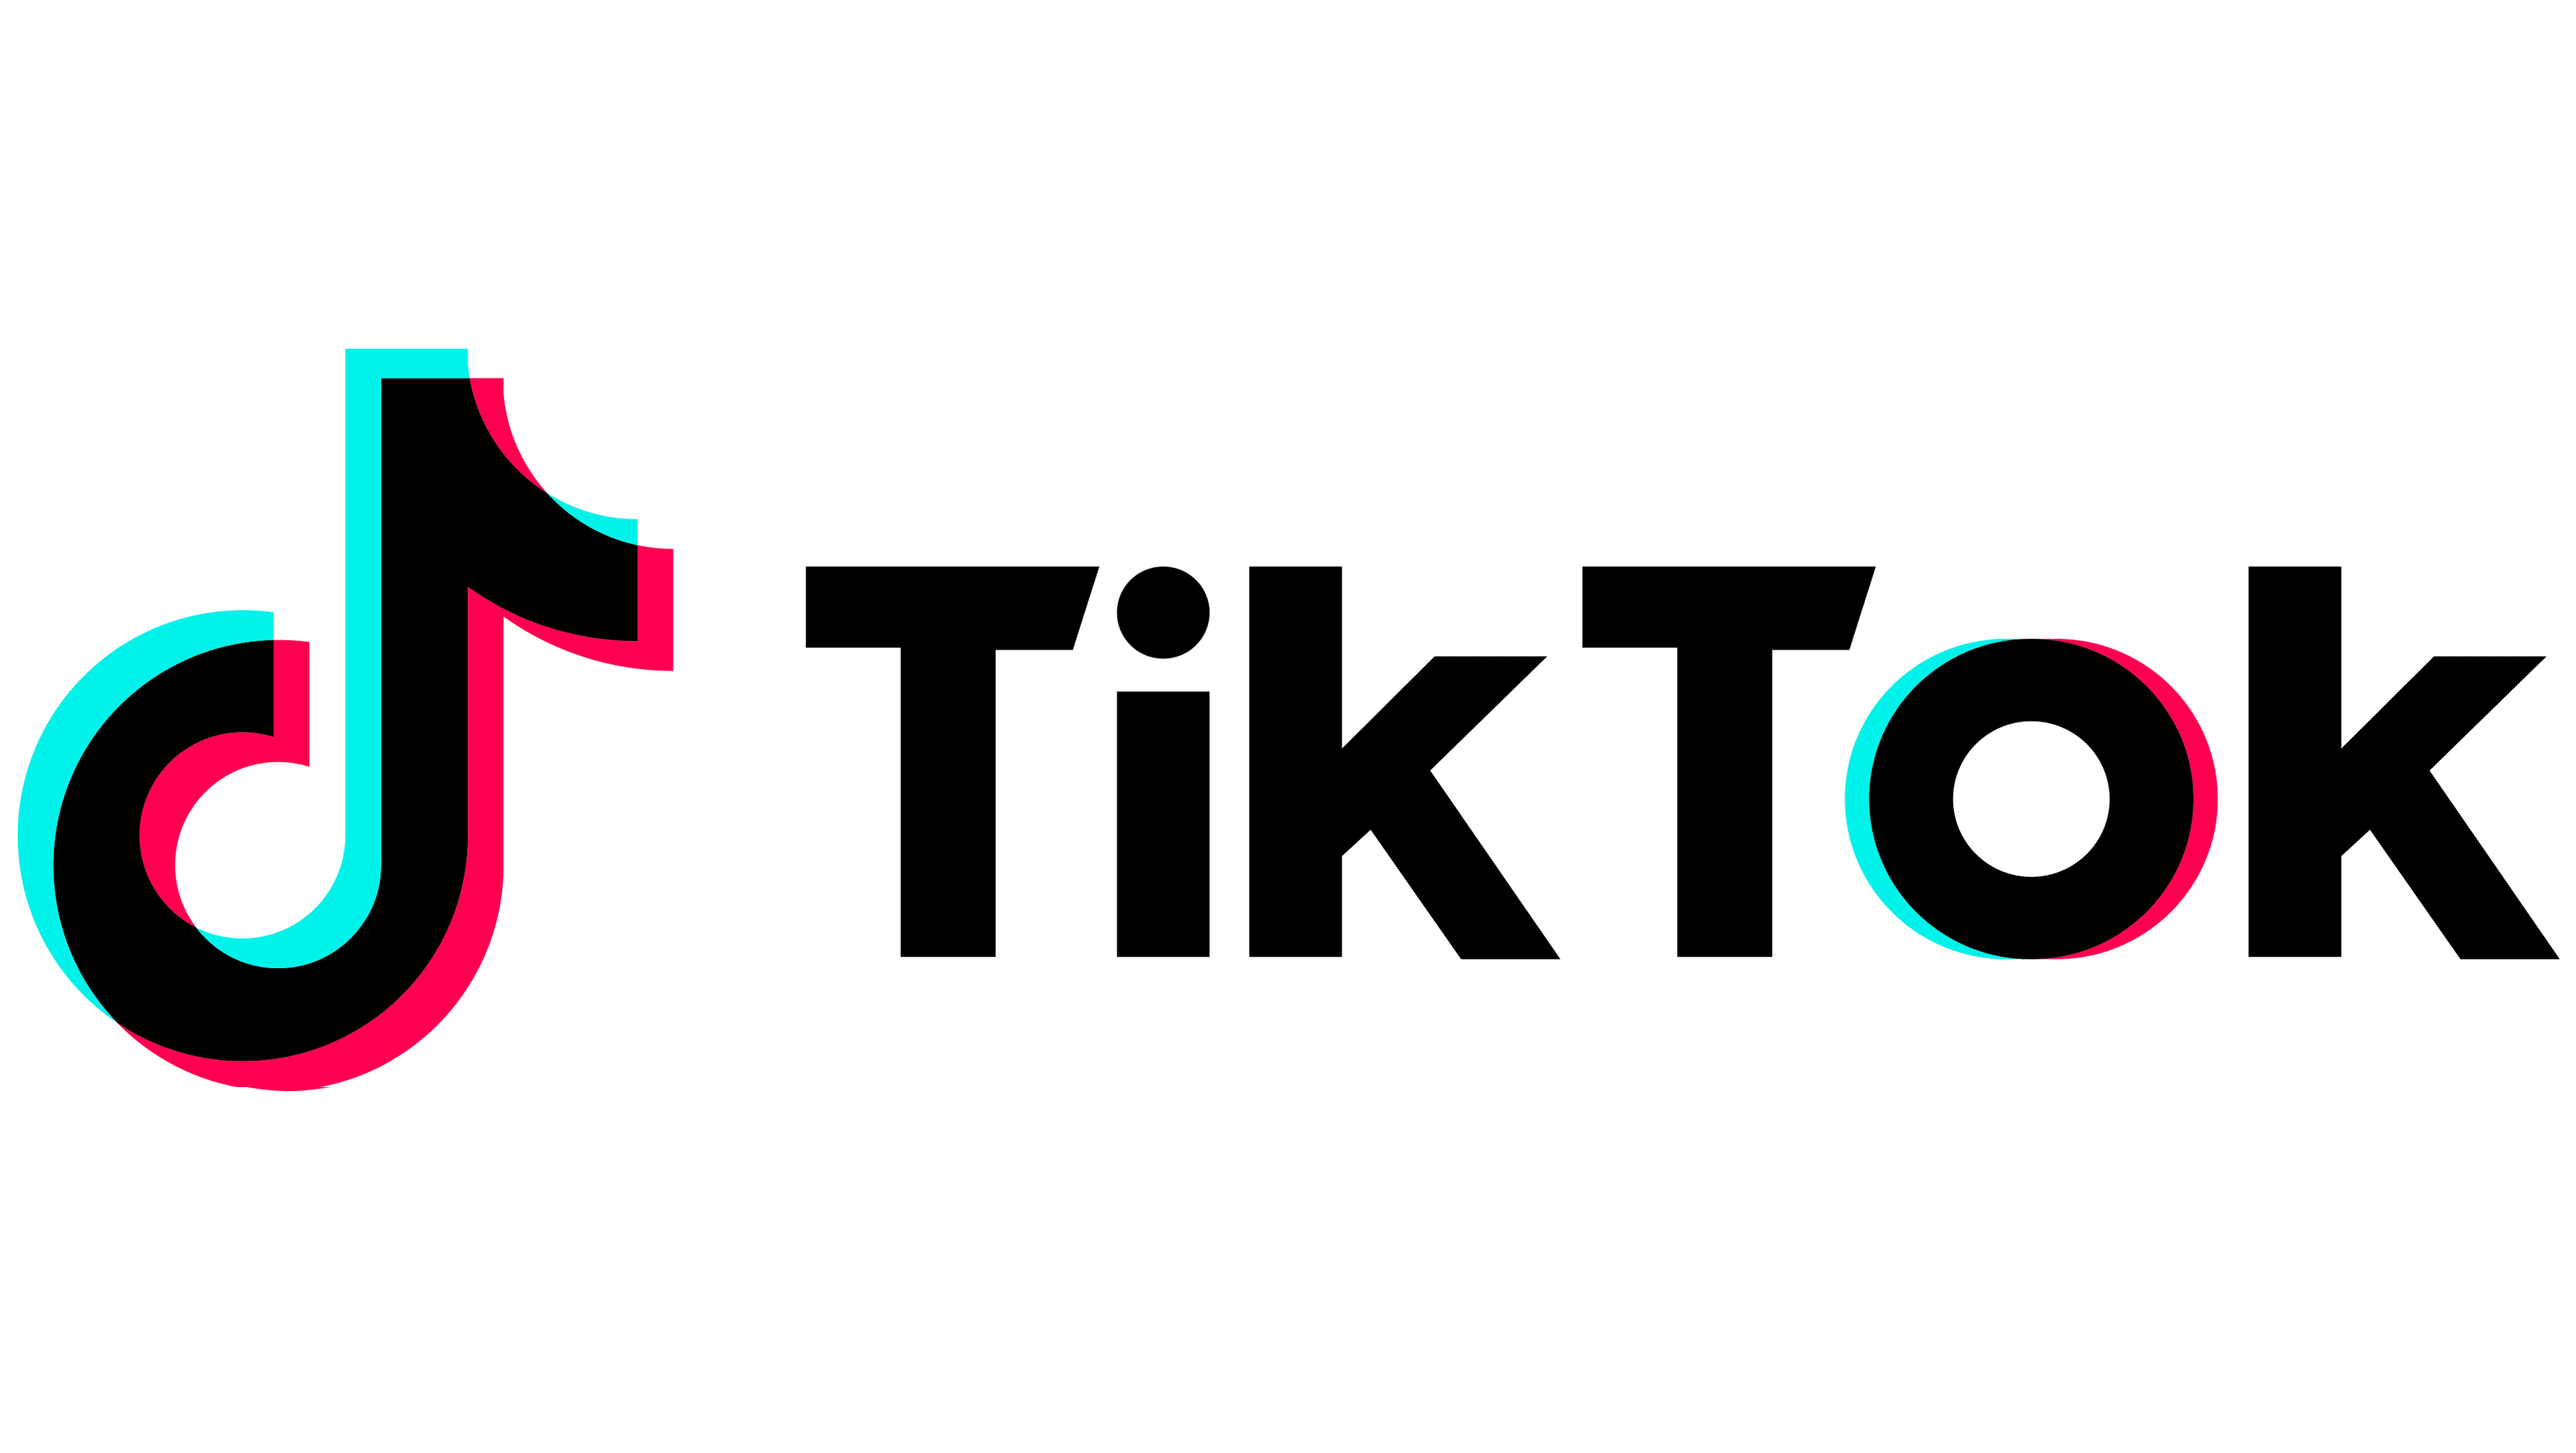 Download TikTok Videos with Ease using Downloader.ltd